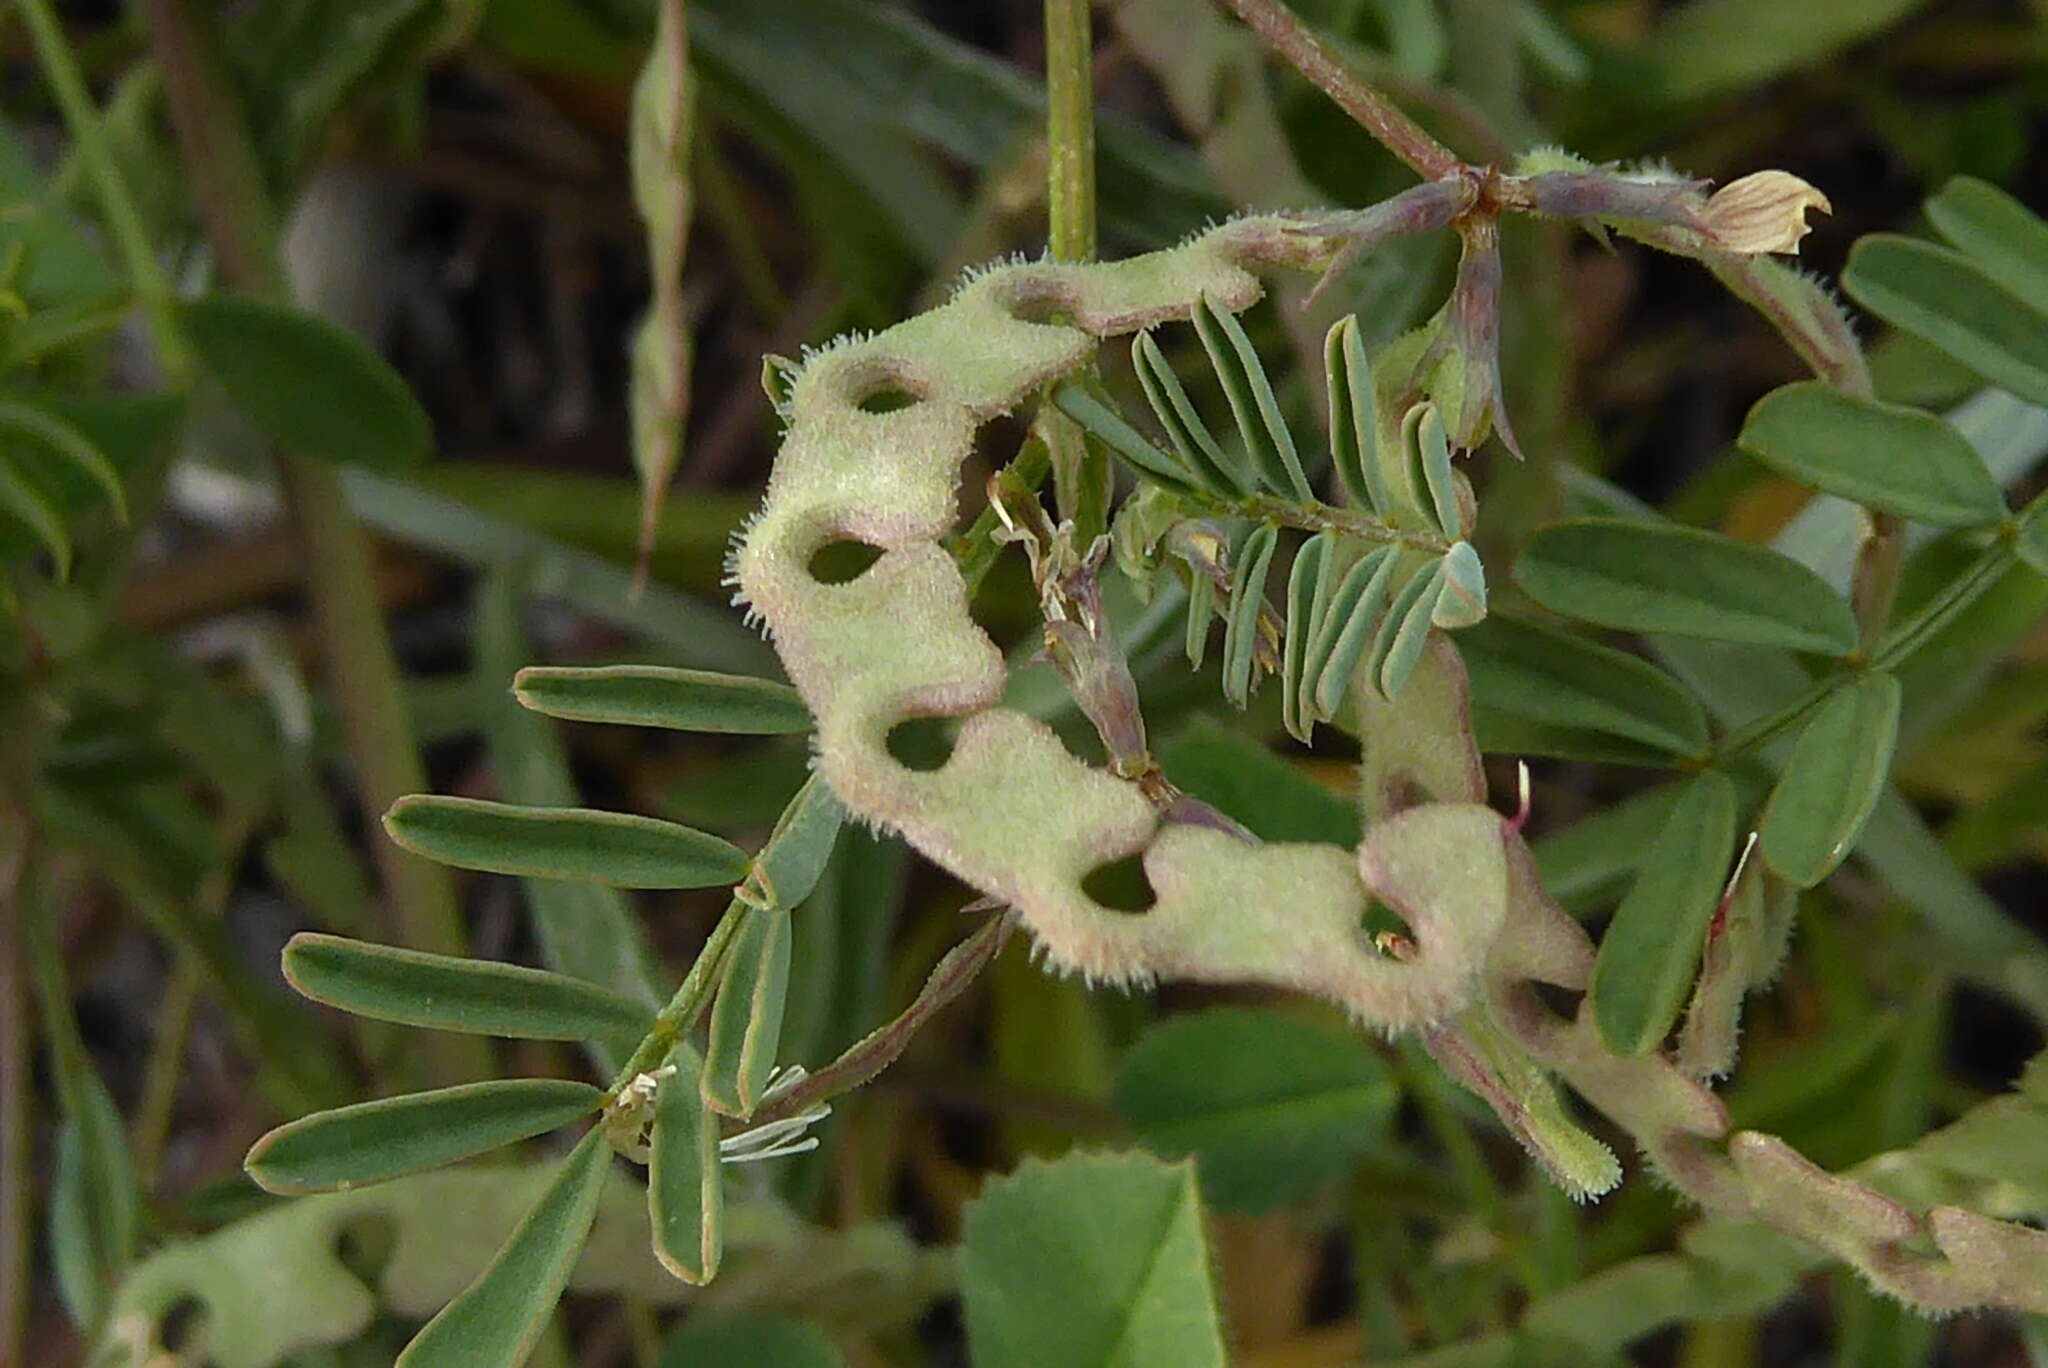 Sivun Hippocrepis ciliata Willd. kuva